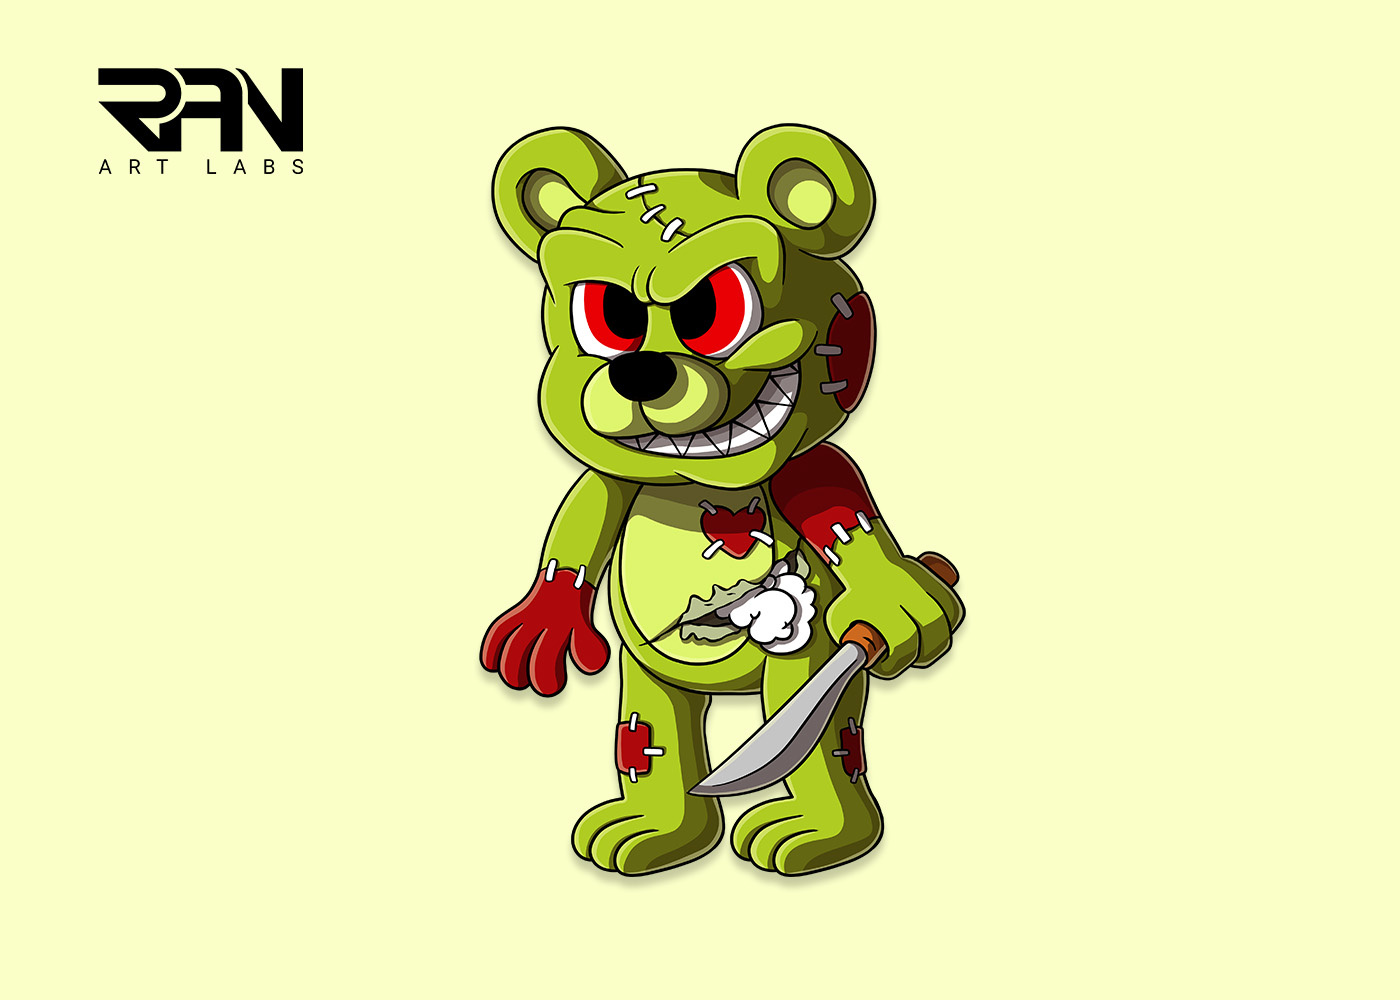 Cute evil teddy bear cartoon mascot character design by RAN Art Labs on